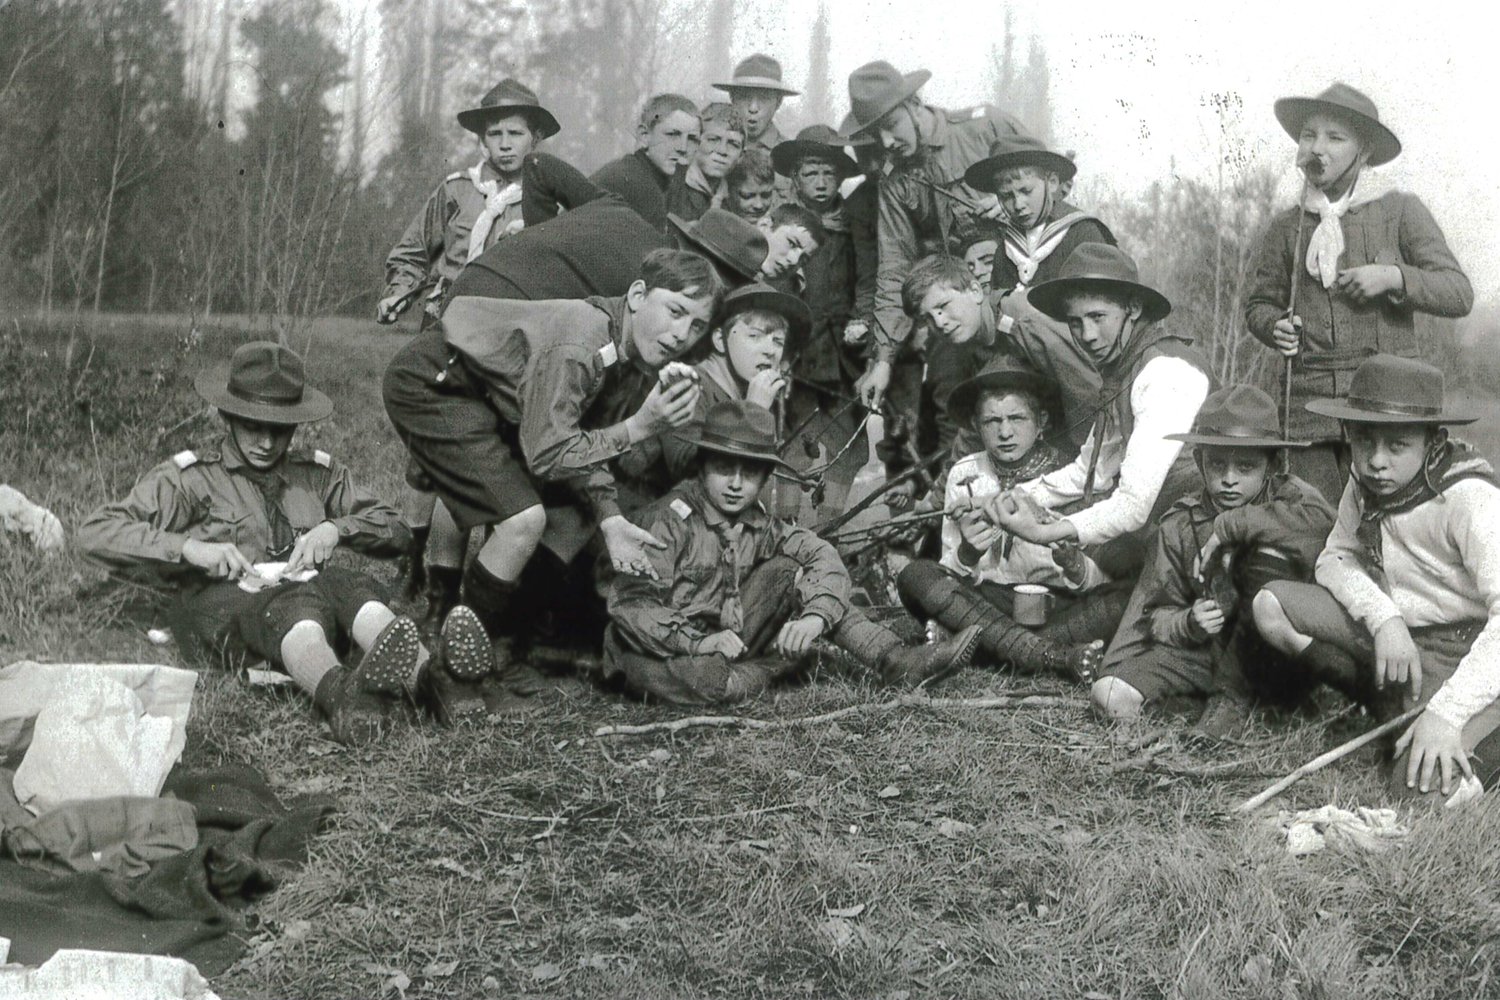 Jeunesse Club Genf (vermutlich ältestes Pfadifoto), 1913